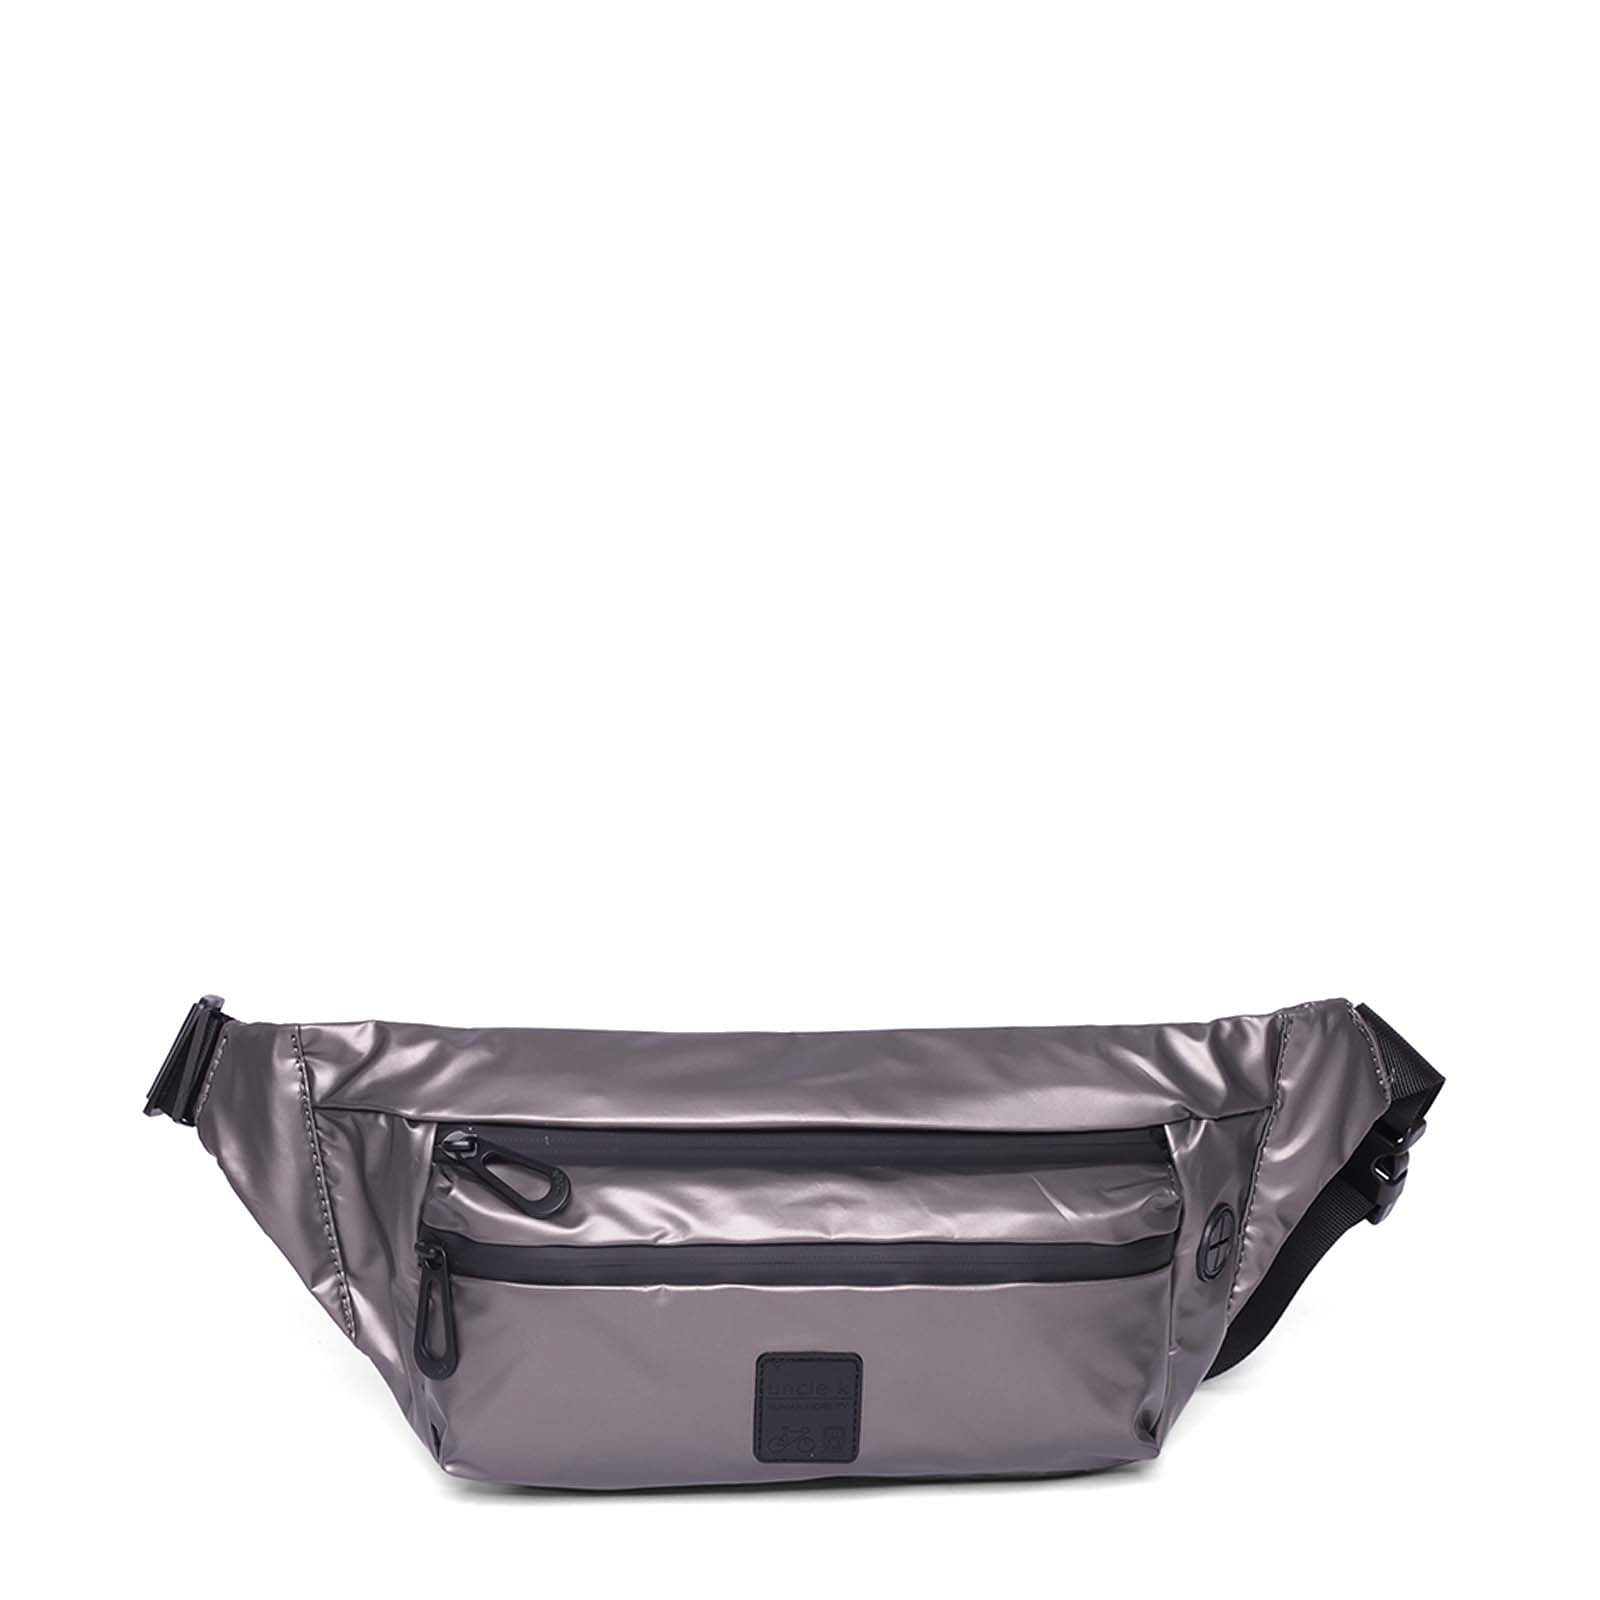 pochete-nylon-rubber-70475-i23-unclek-cinza-metal-1